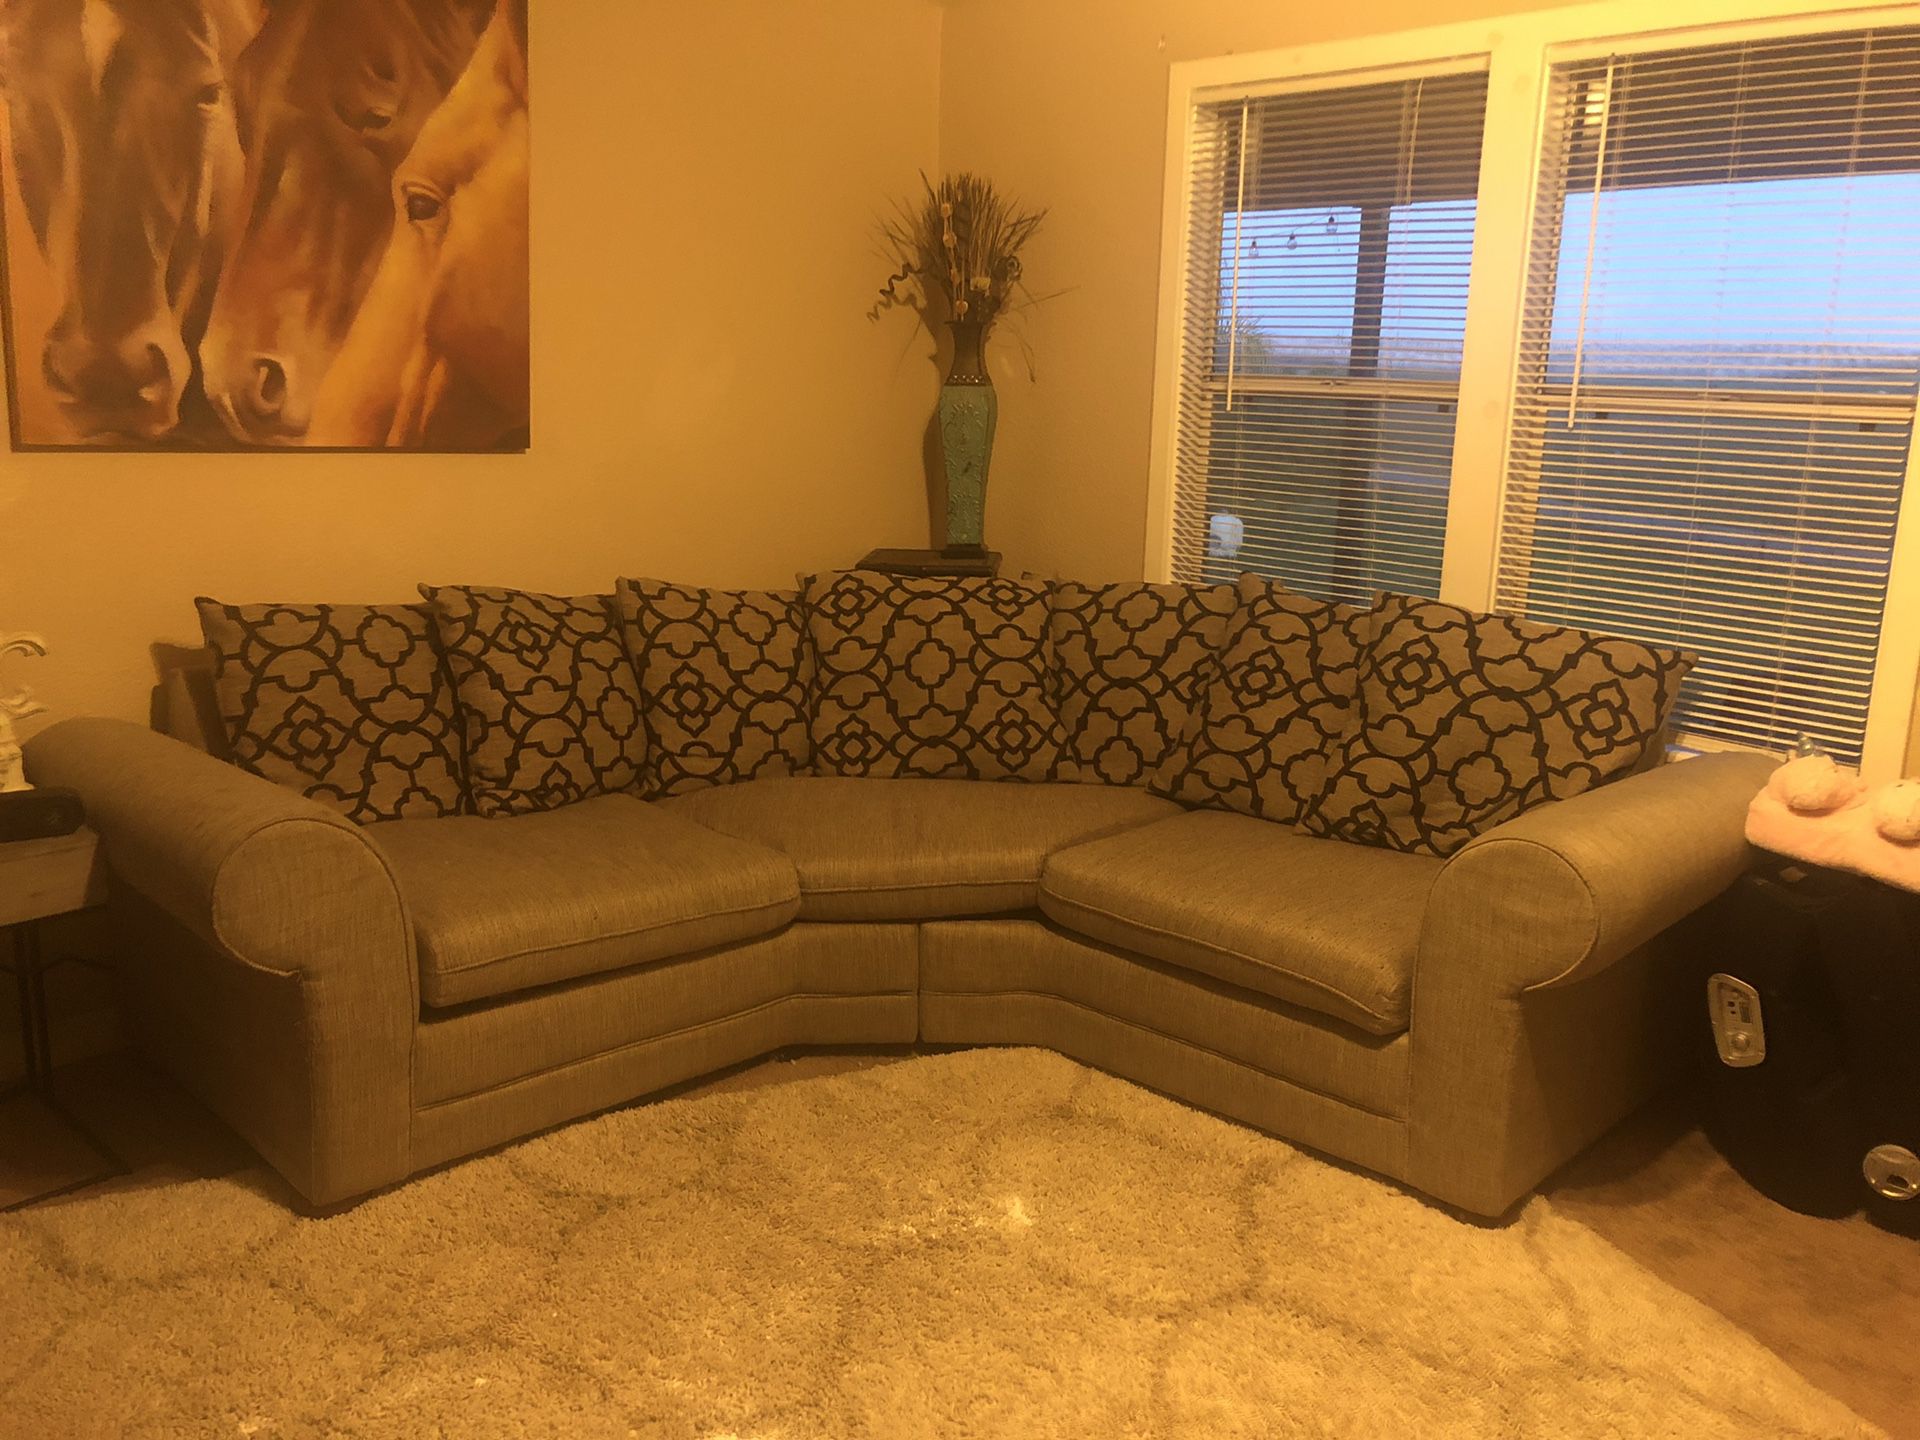 Small sectional sofa